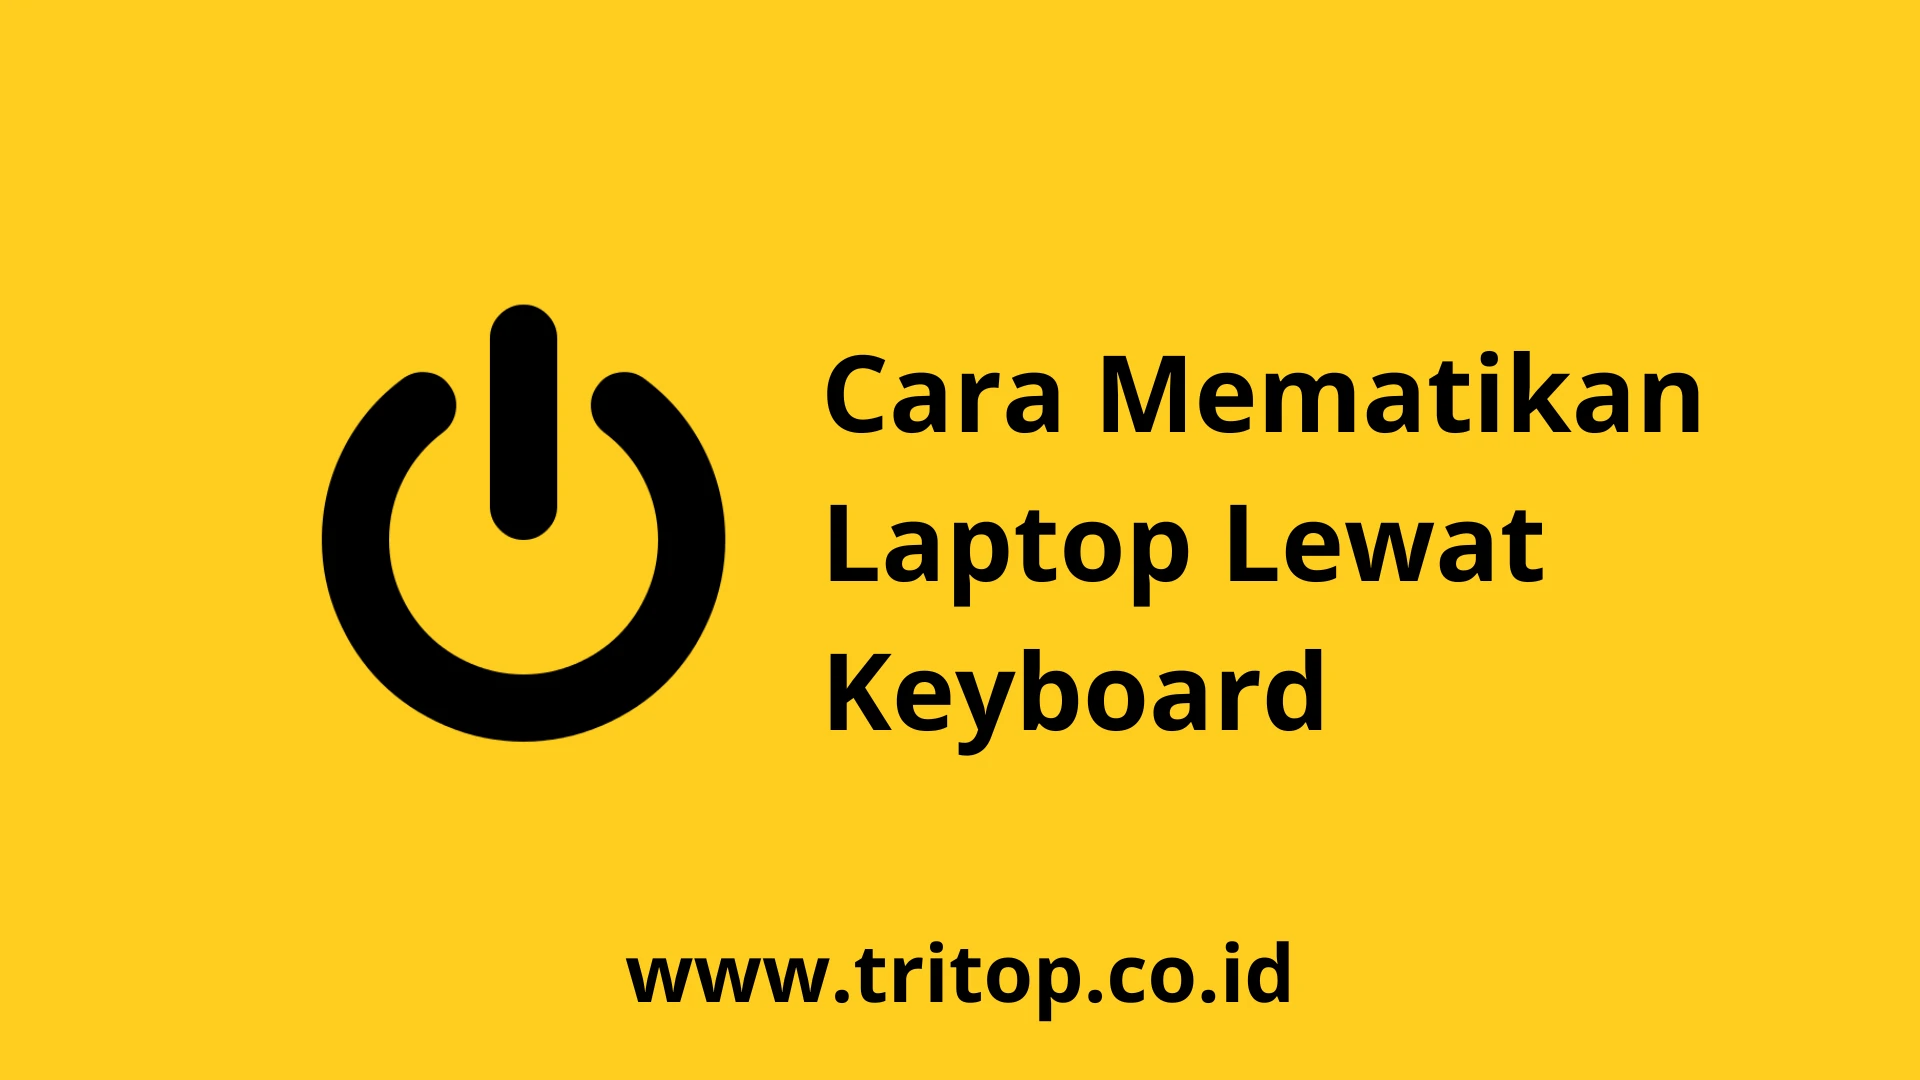 Mematikan Laptop Lewat Keyboard Tritop.co.id